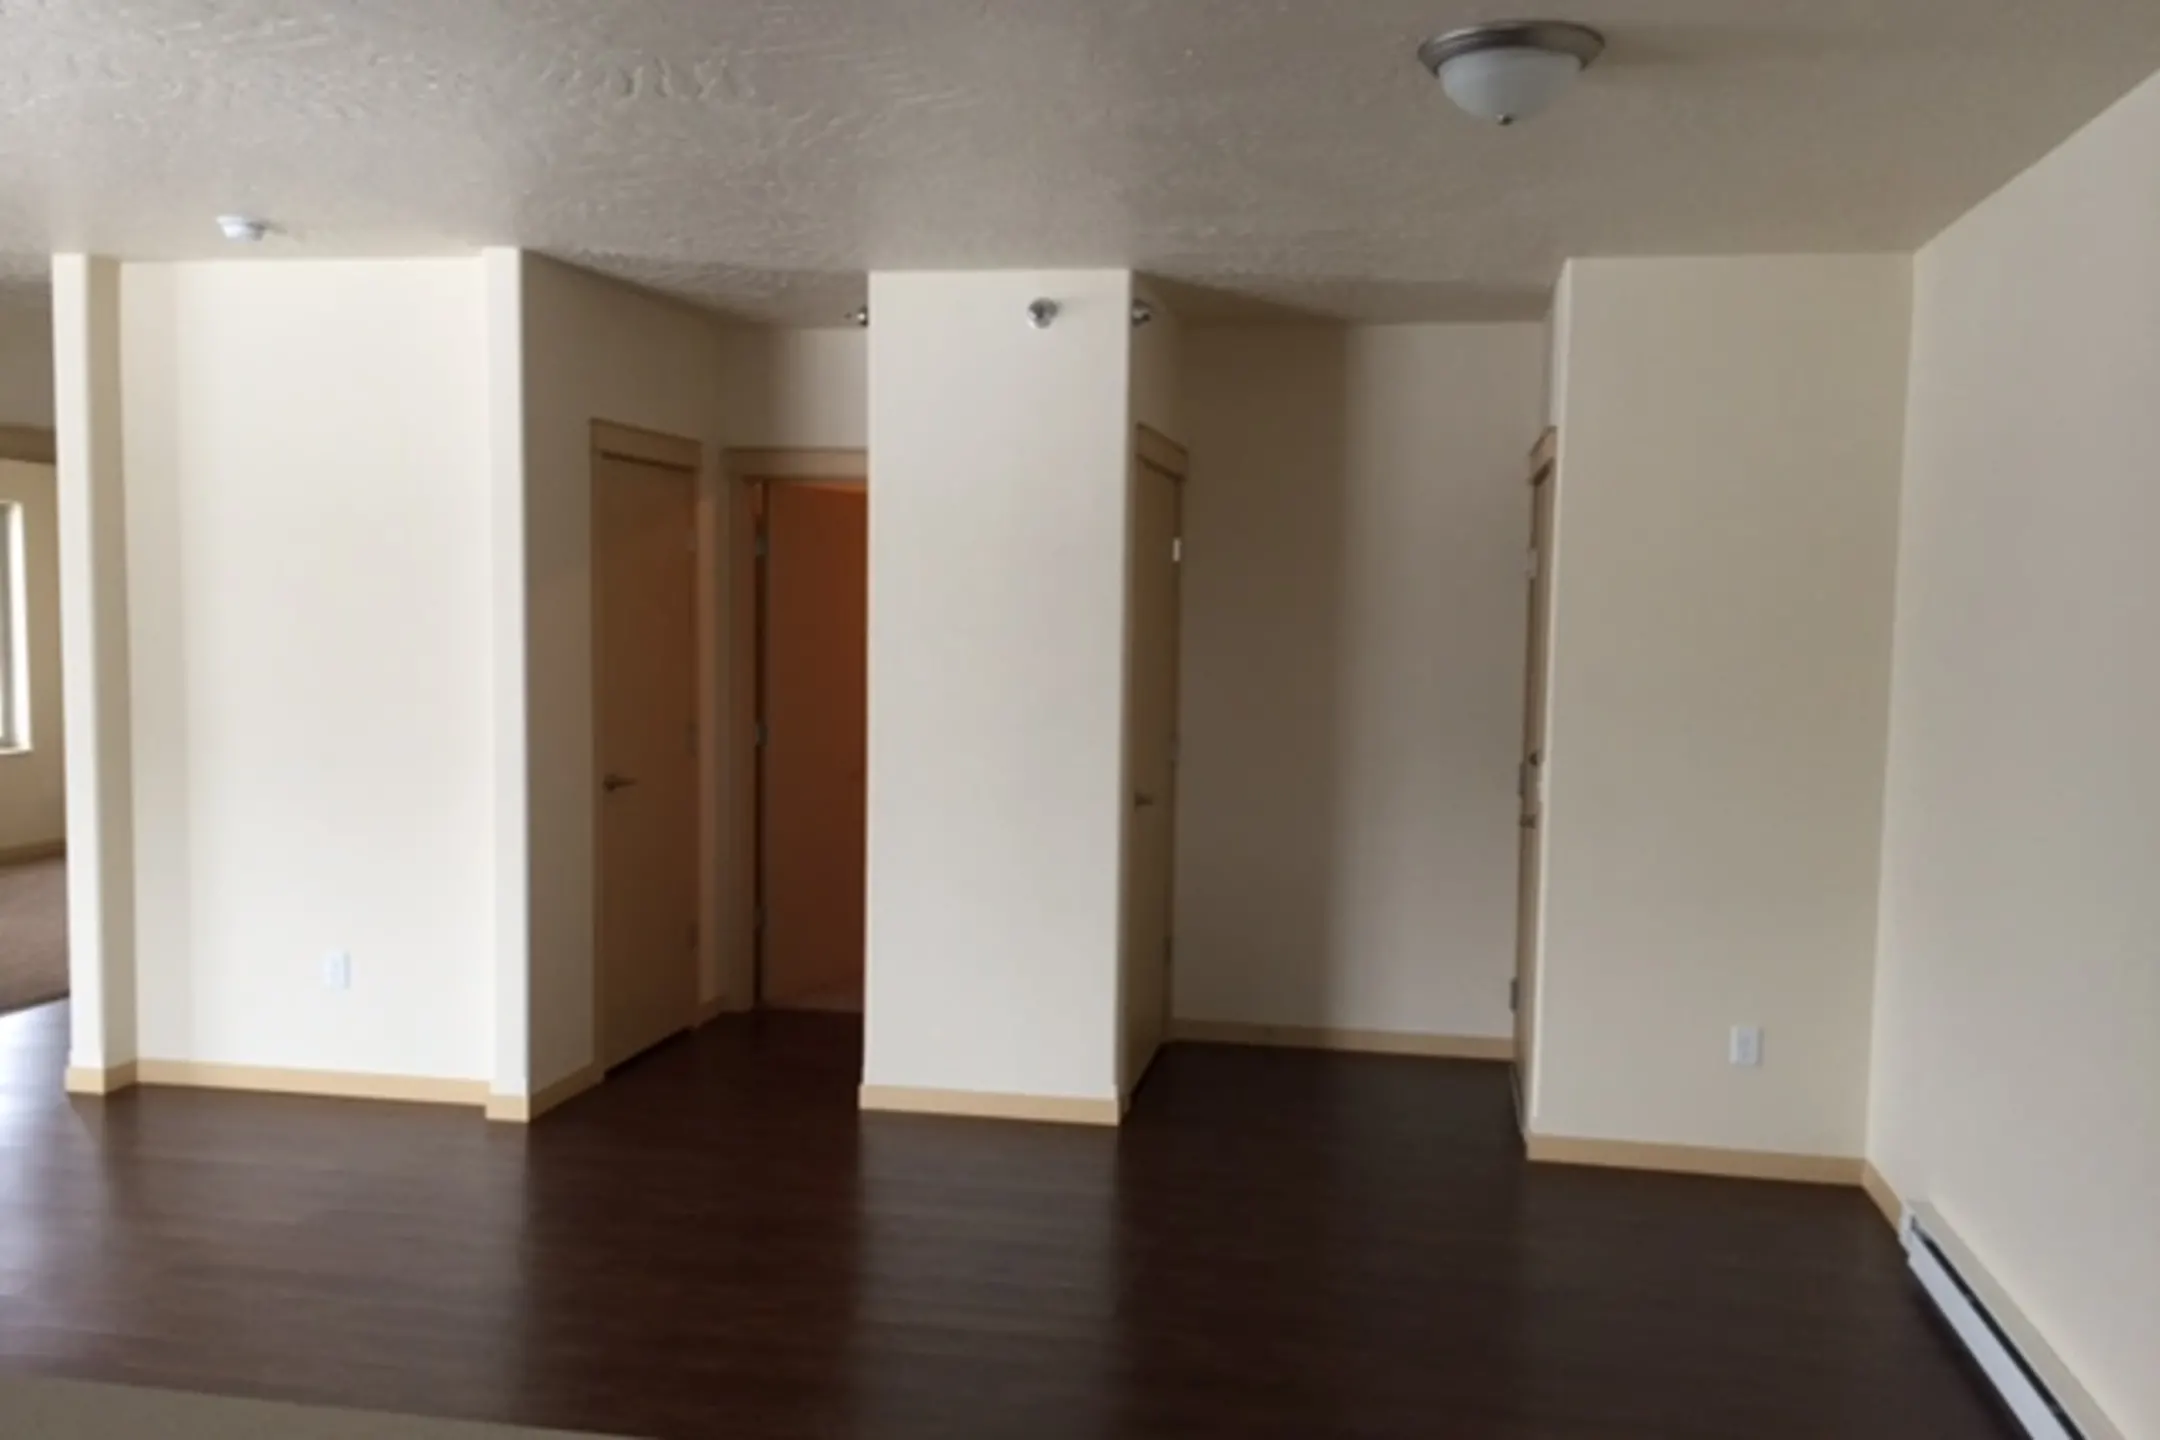 Dining Room - Aspen Ponds Apartments - Fargo, ND